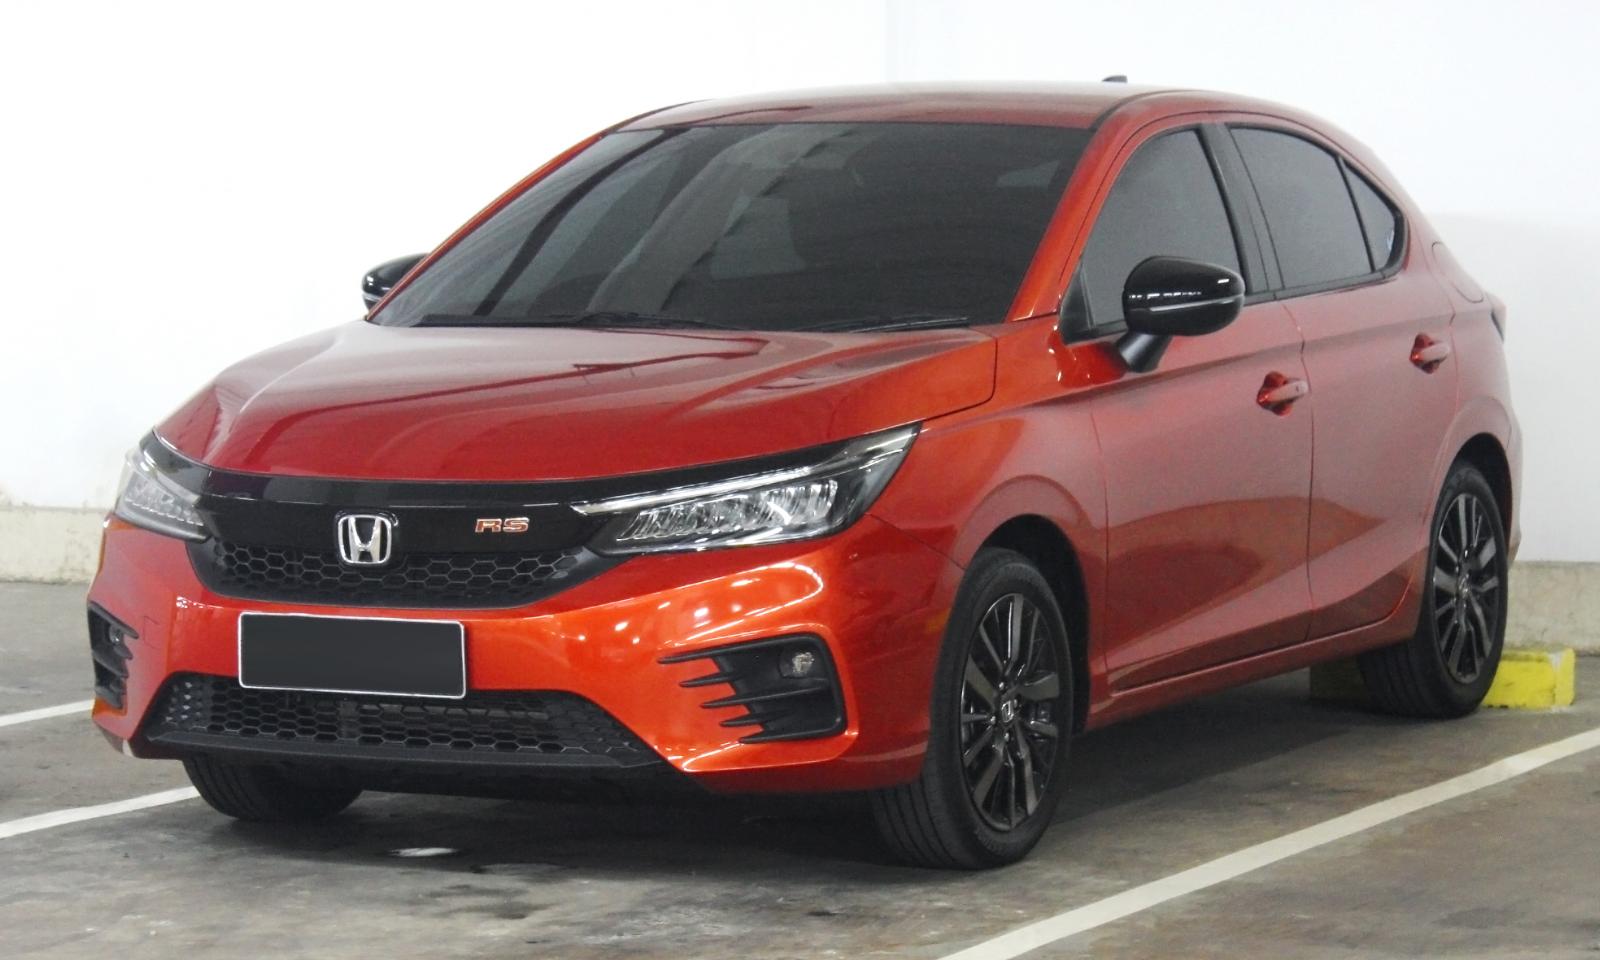 Honda City Hatchback Review